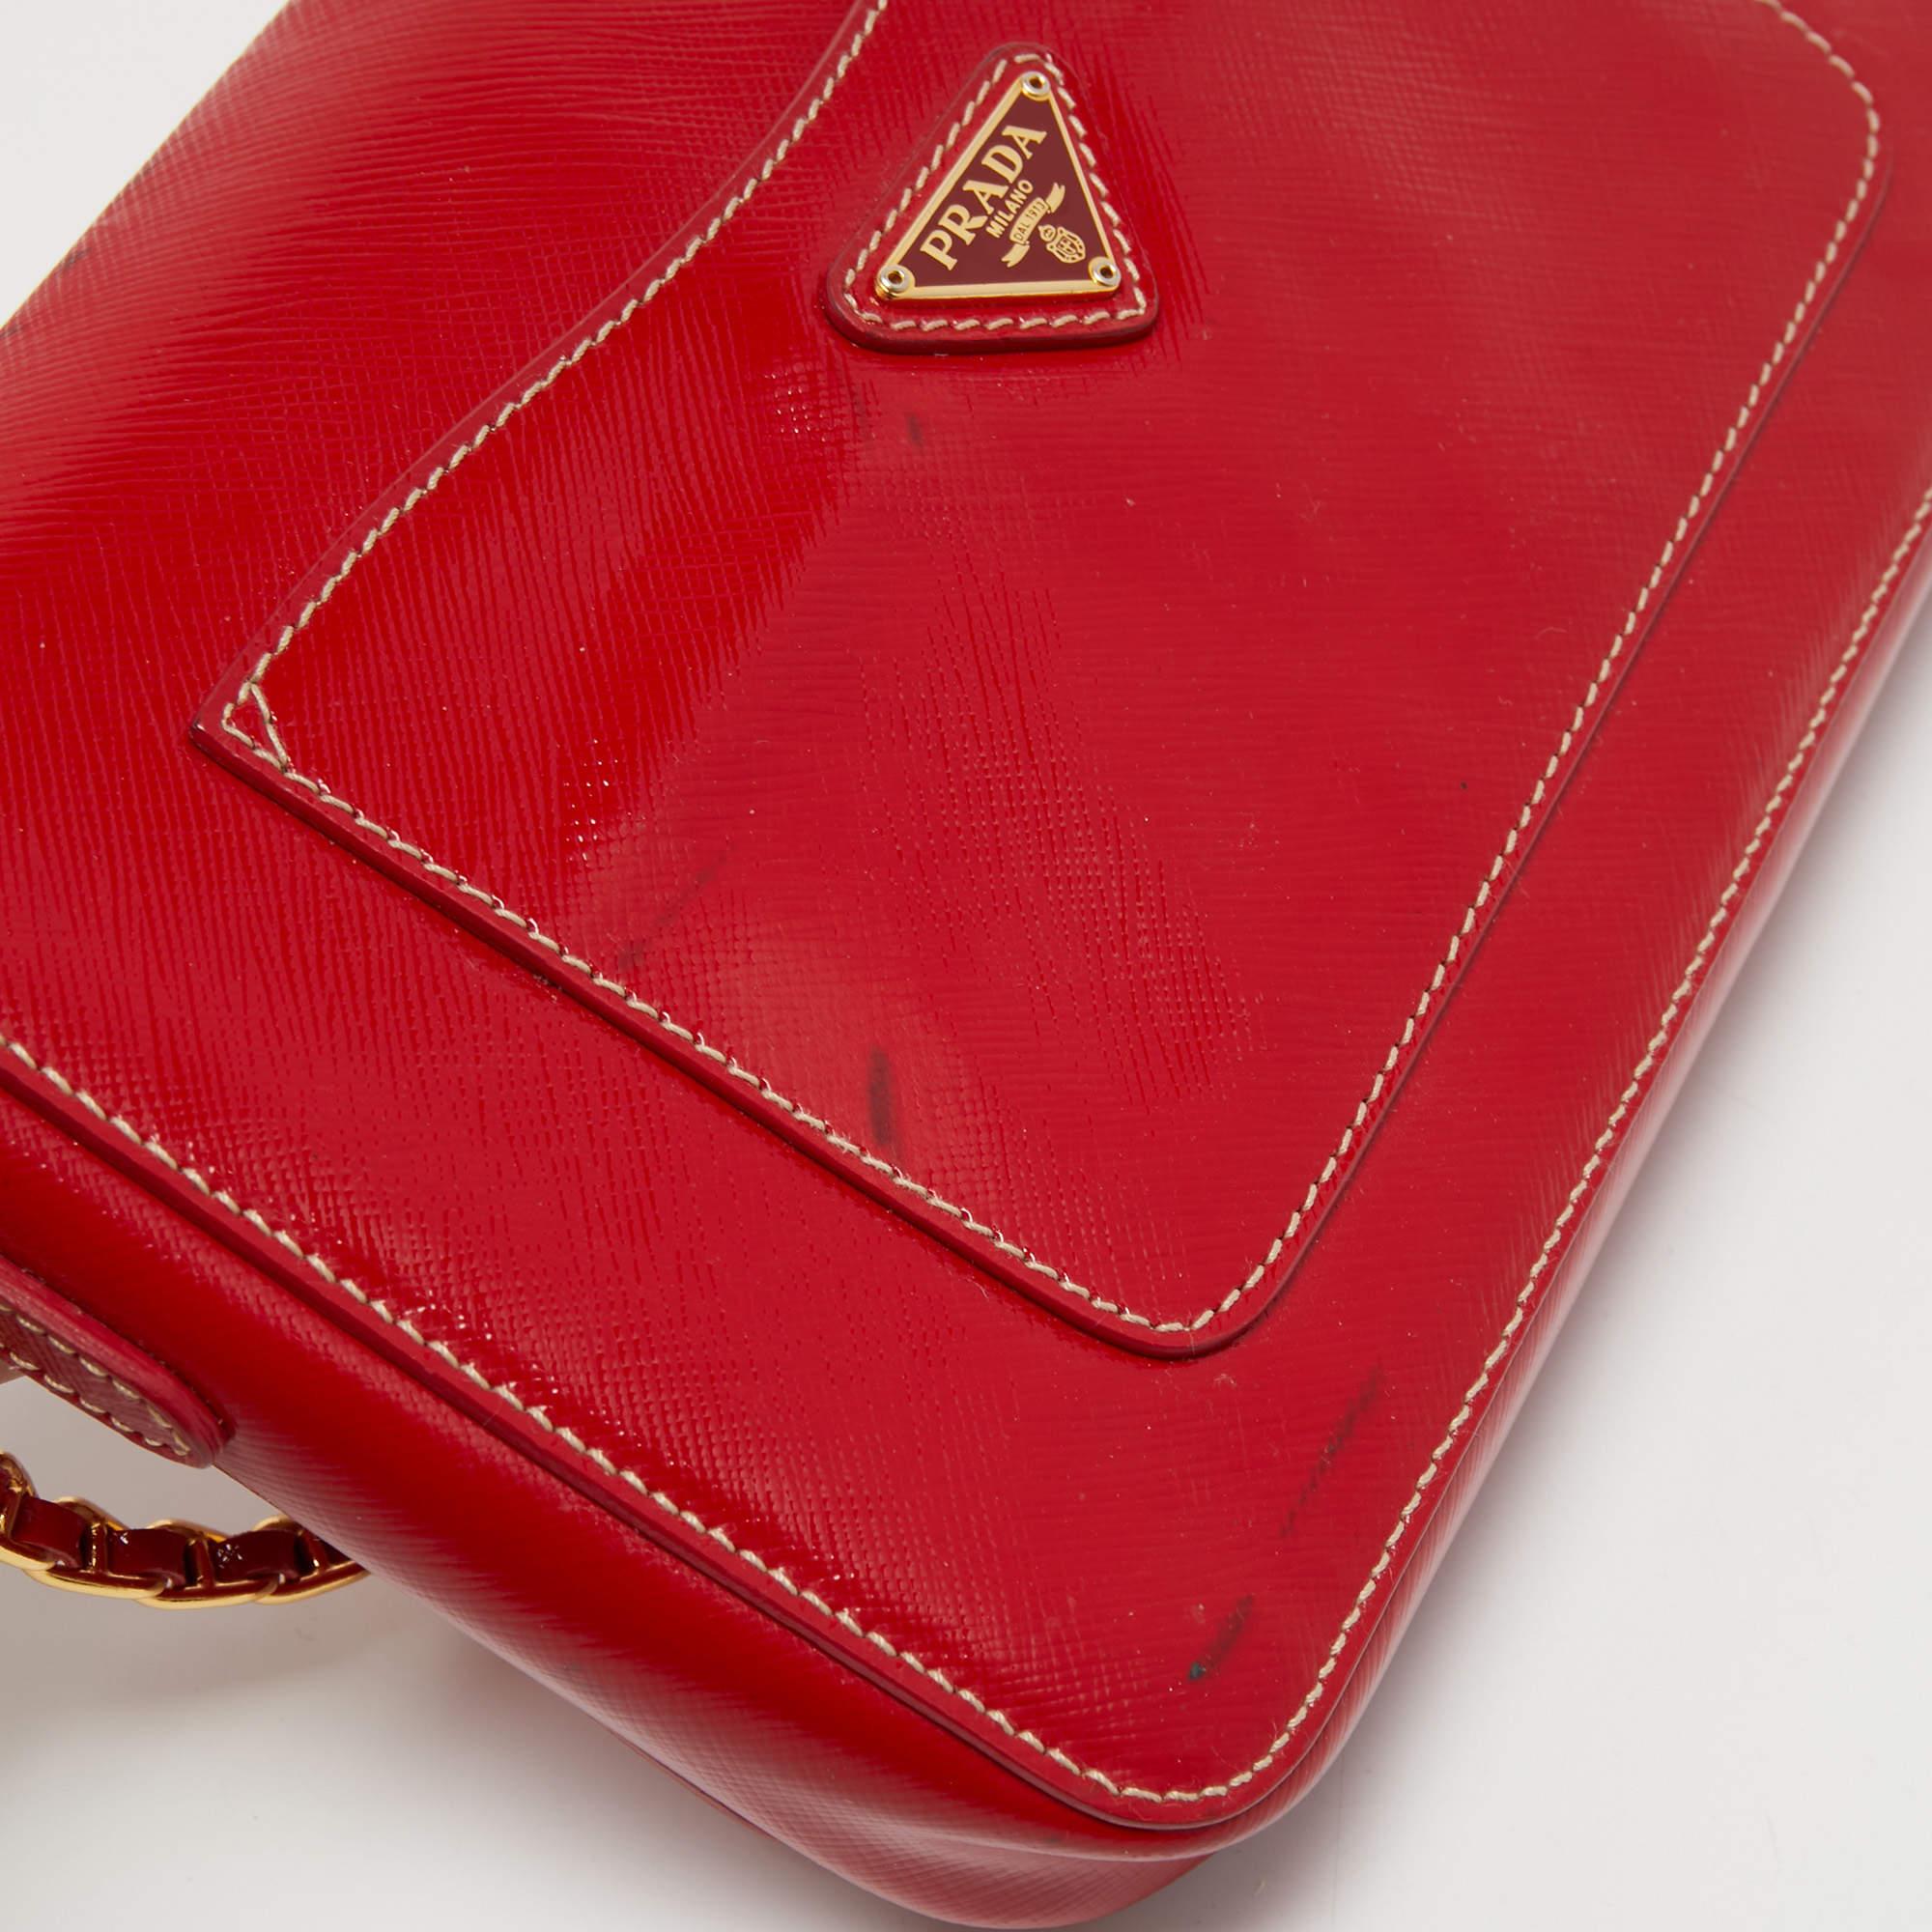 Prada Red Patent Leather Flap Crossbody Bag 7